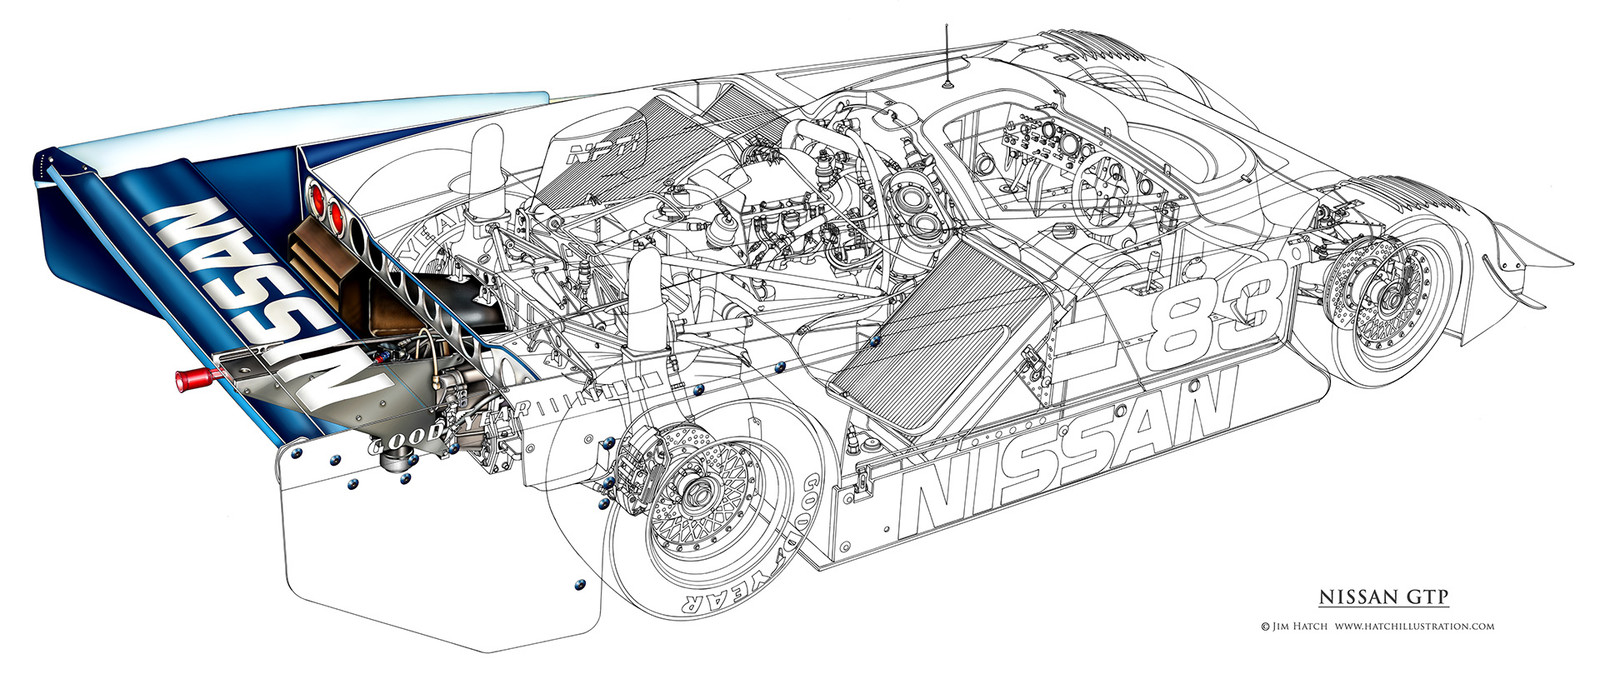 Nissan IMSA GTP Technical Illustration